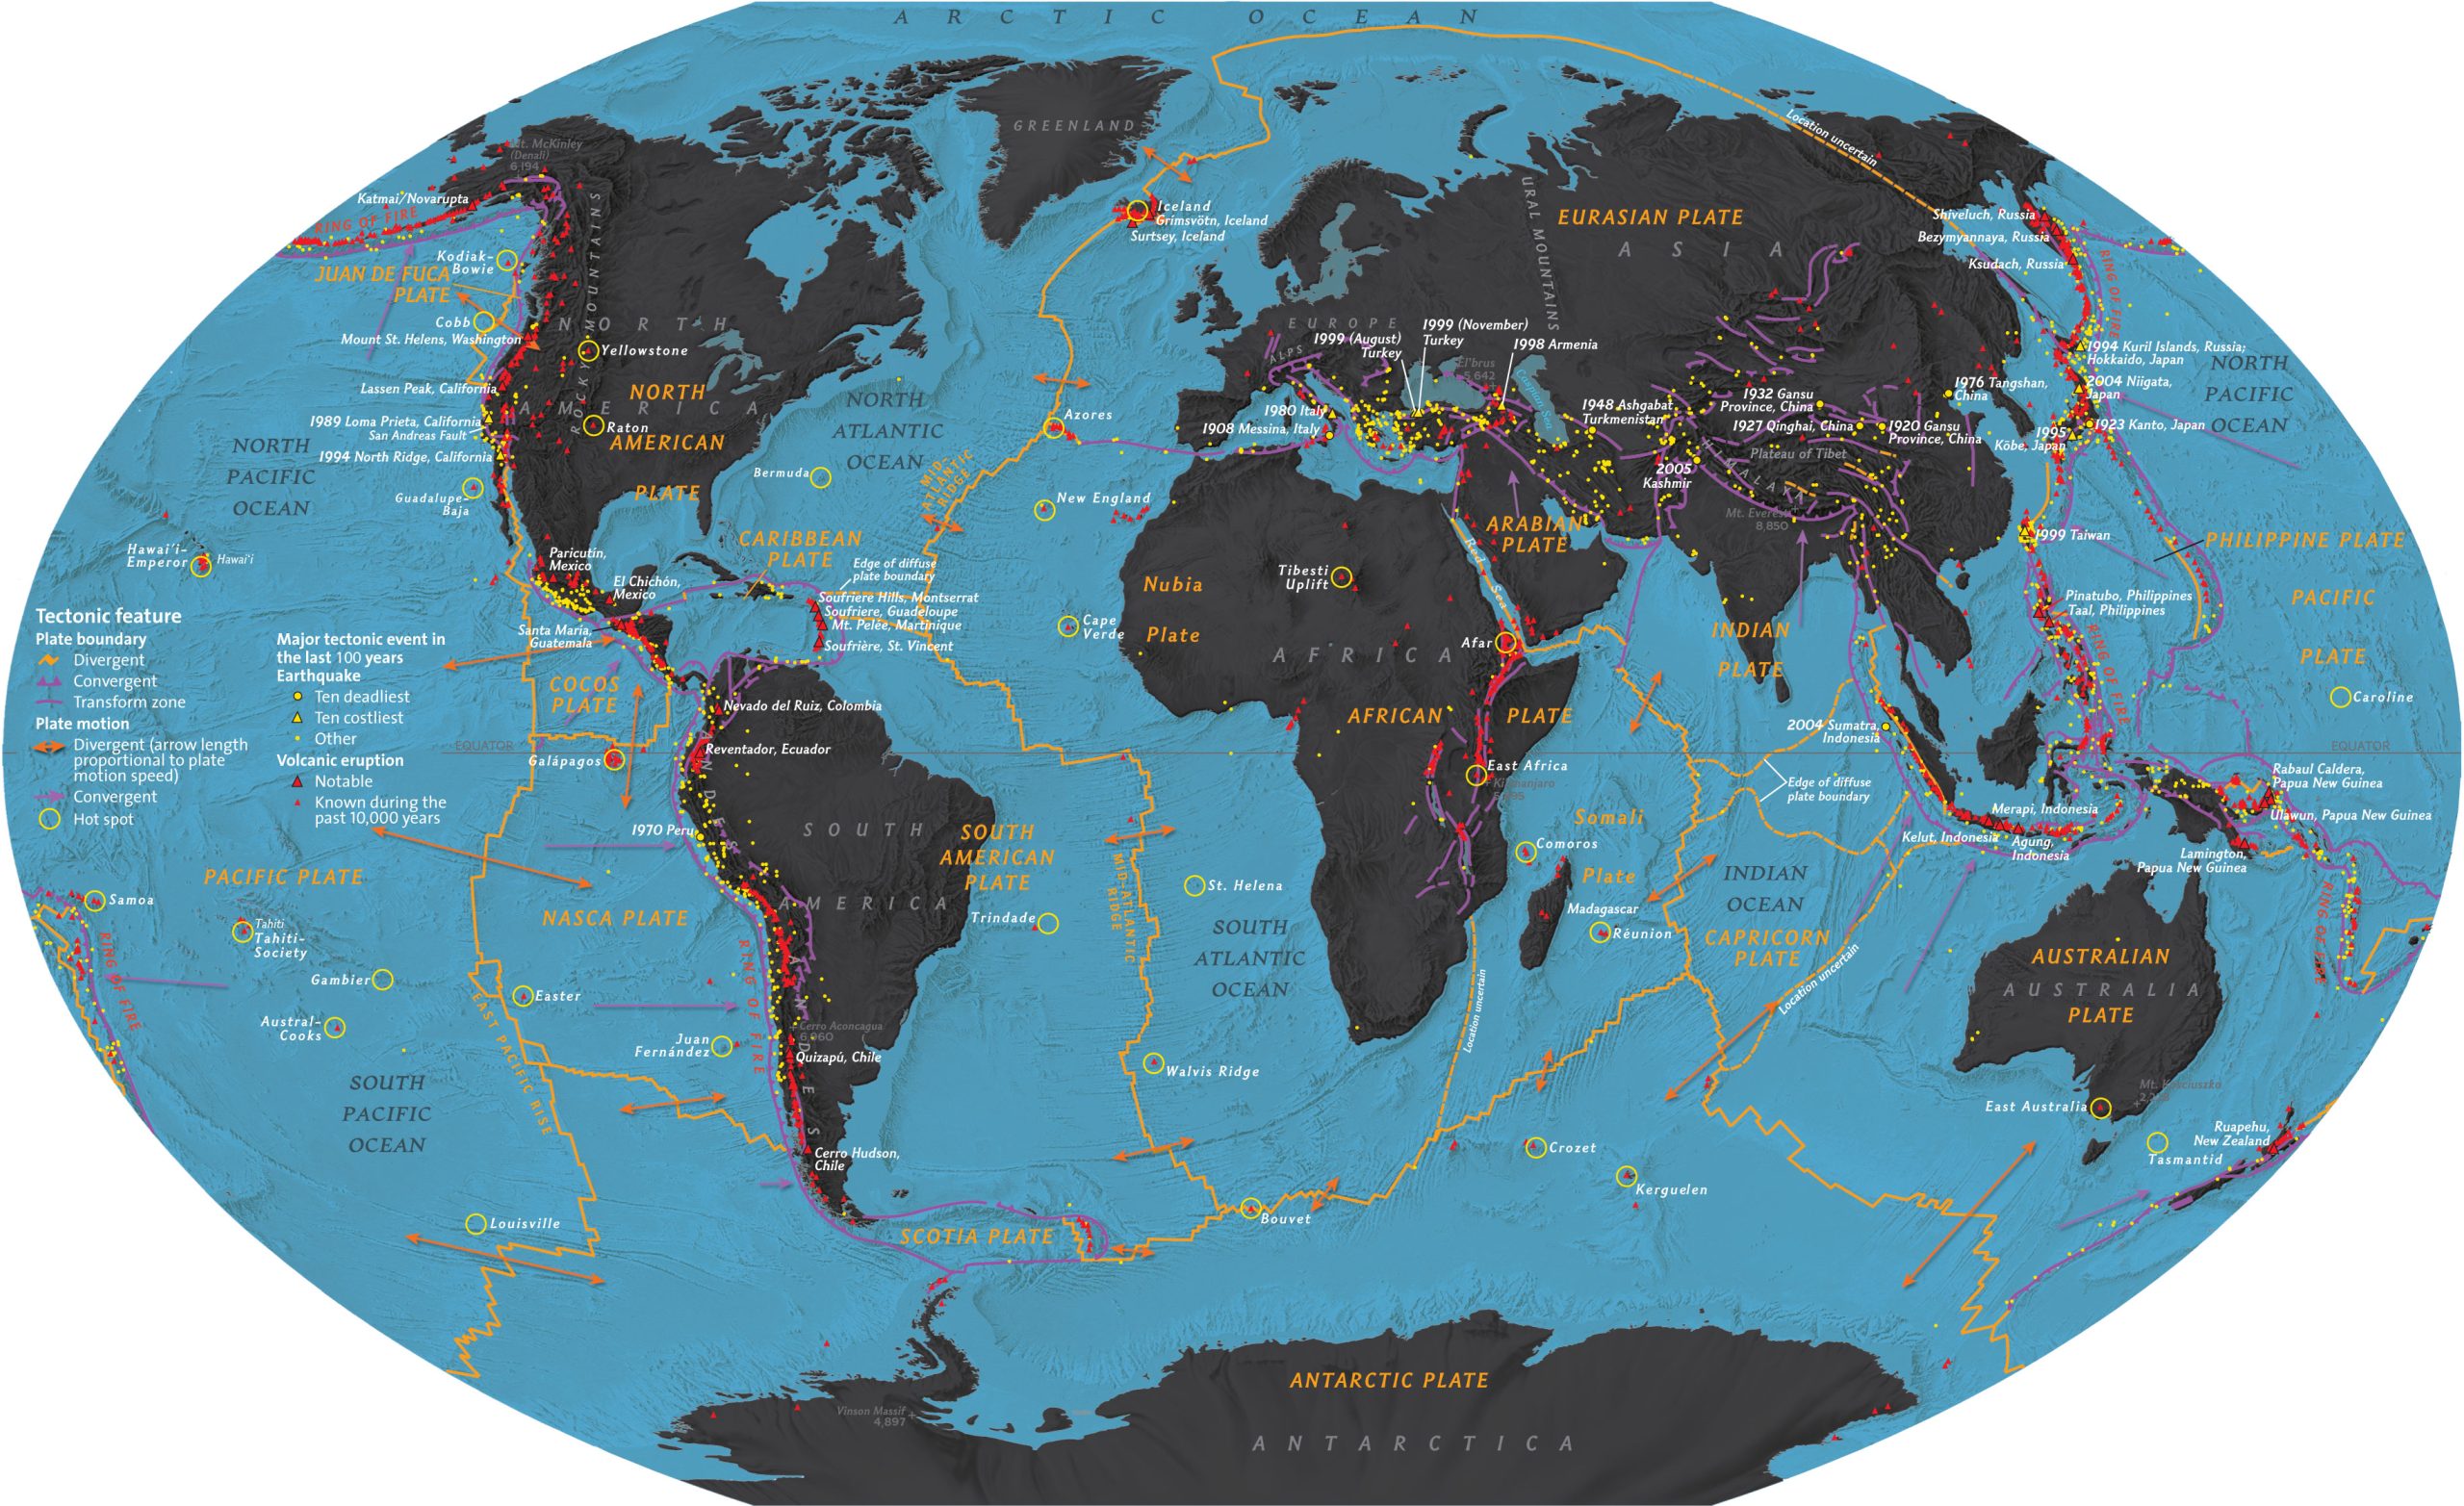 Peta Dunia World Tectonic Plate 2011